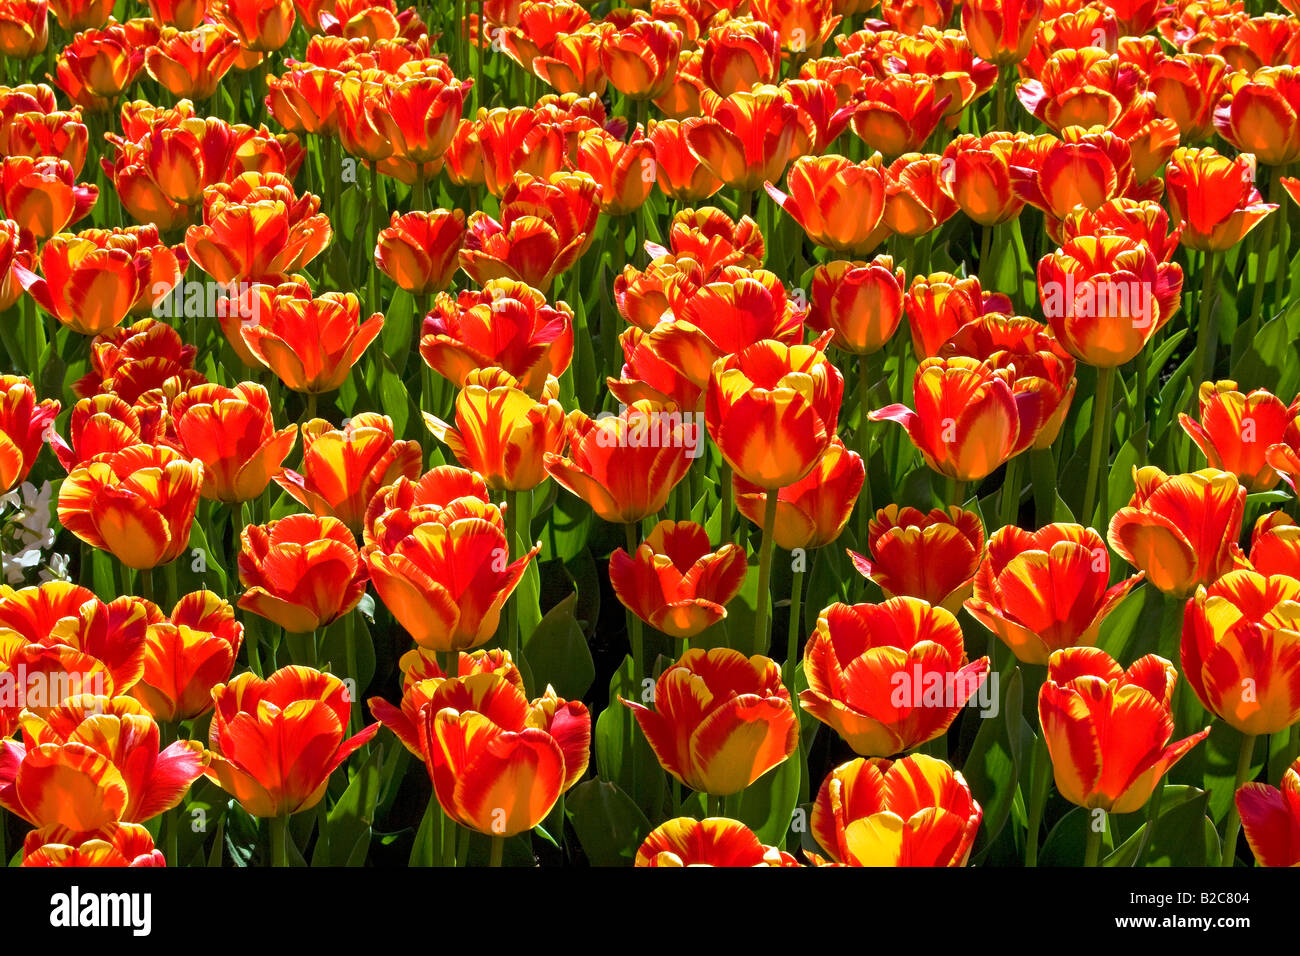 Red-yellow Tulips, Darwin Hybrid Tulip, species Banja Luka (Tulipa Banja Luka) Stock Photo